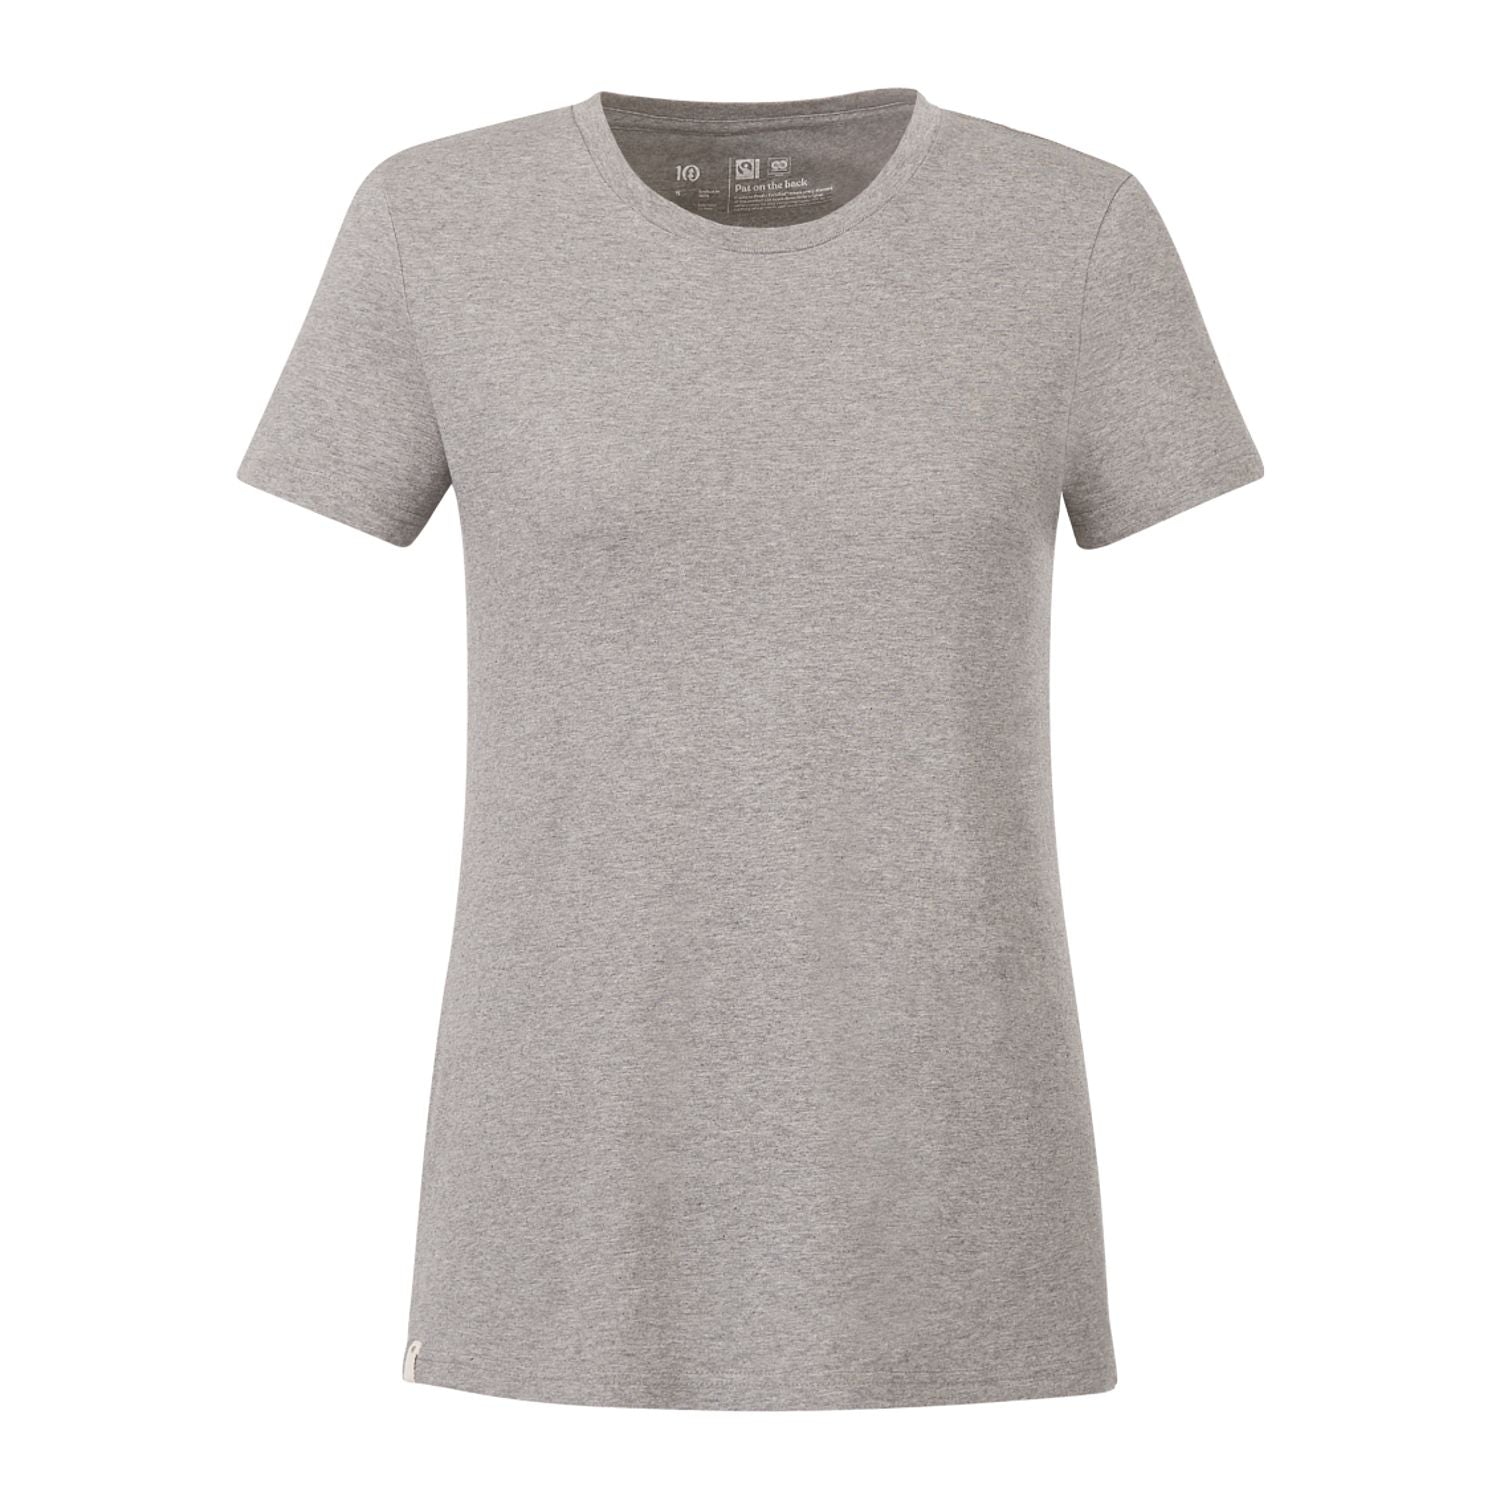 Customizable Tentree men's organic cotton short sleeve tee in heather gray.